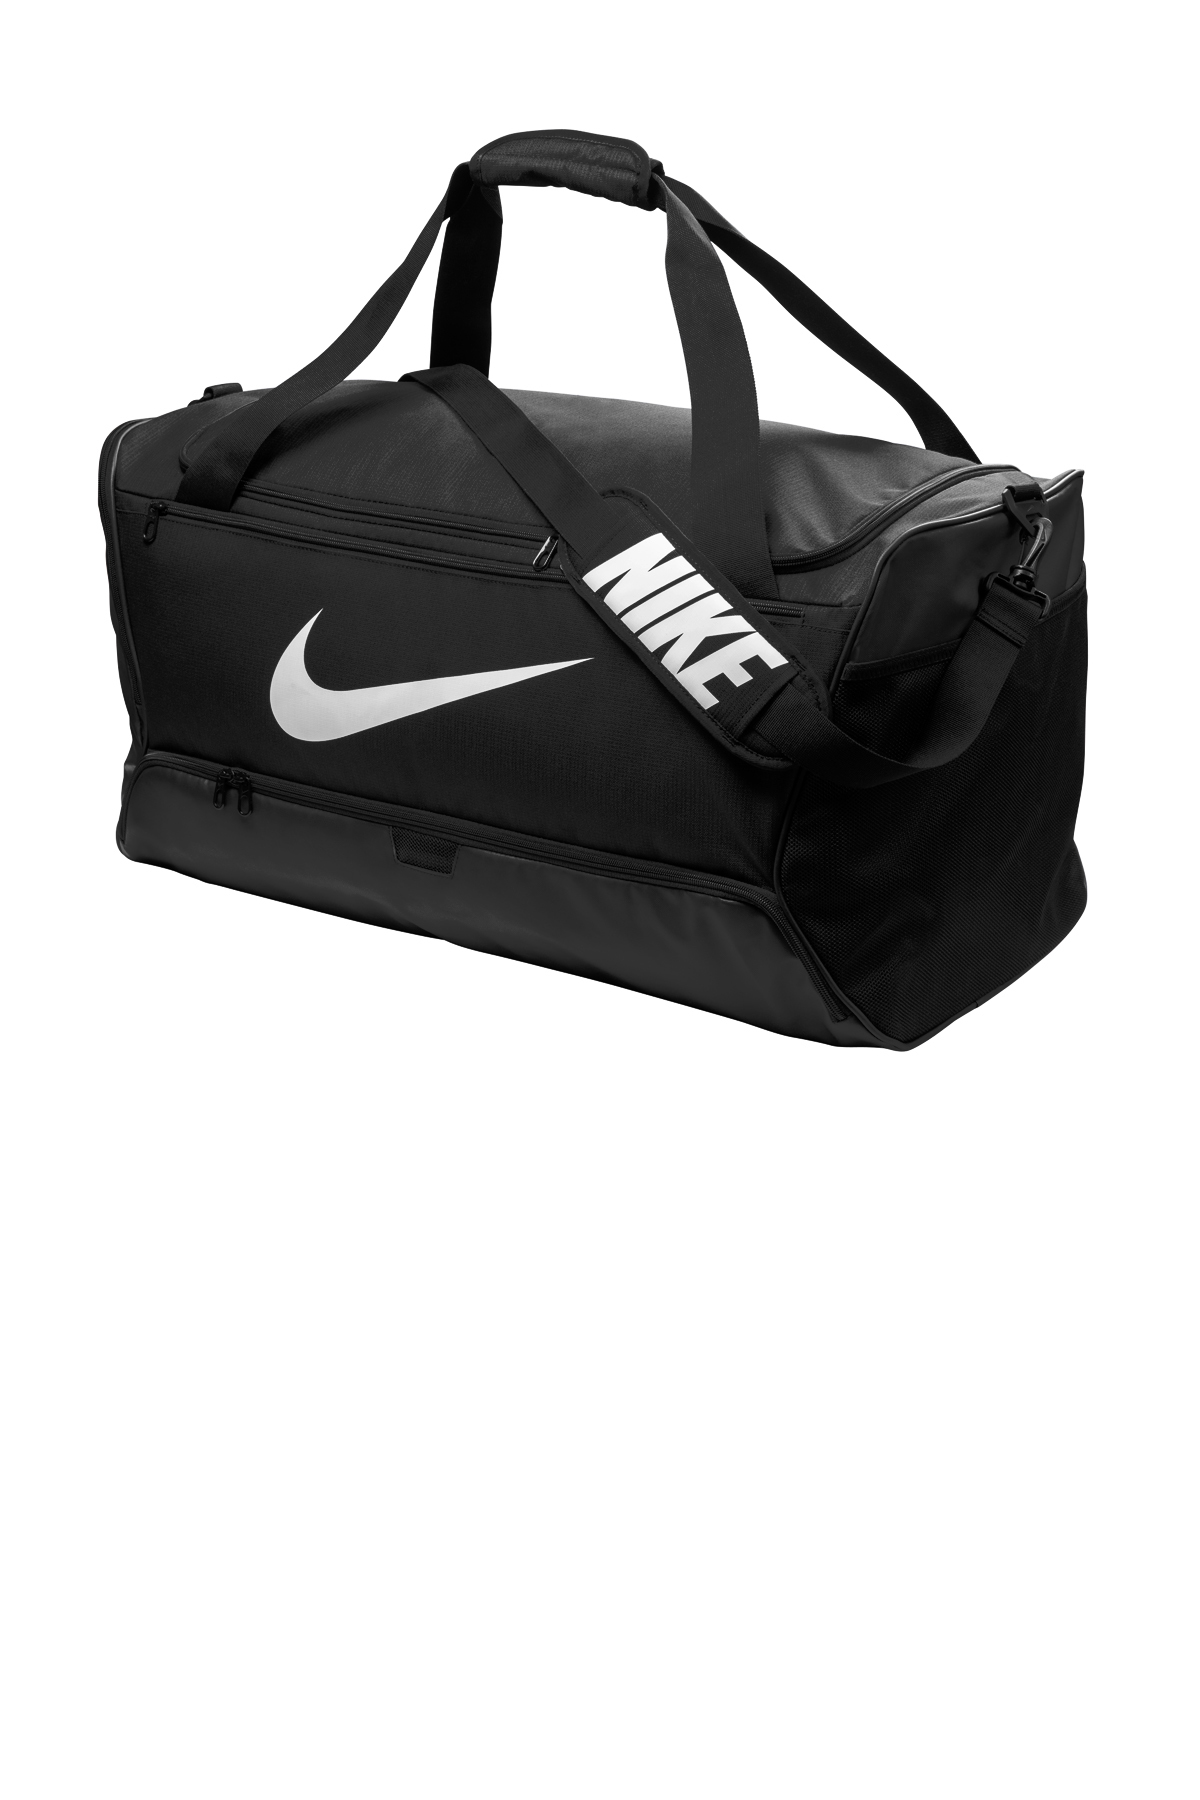 Nike Brasilia Large Duffel, Product